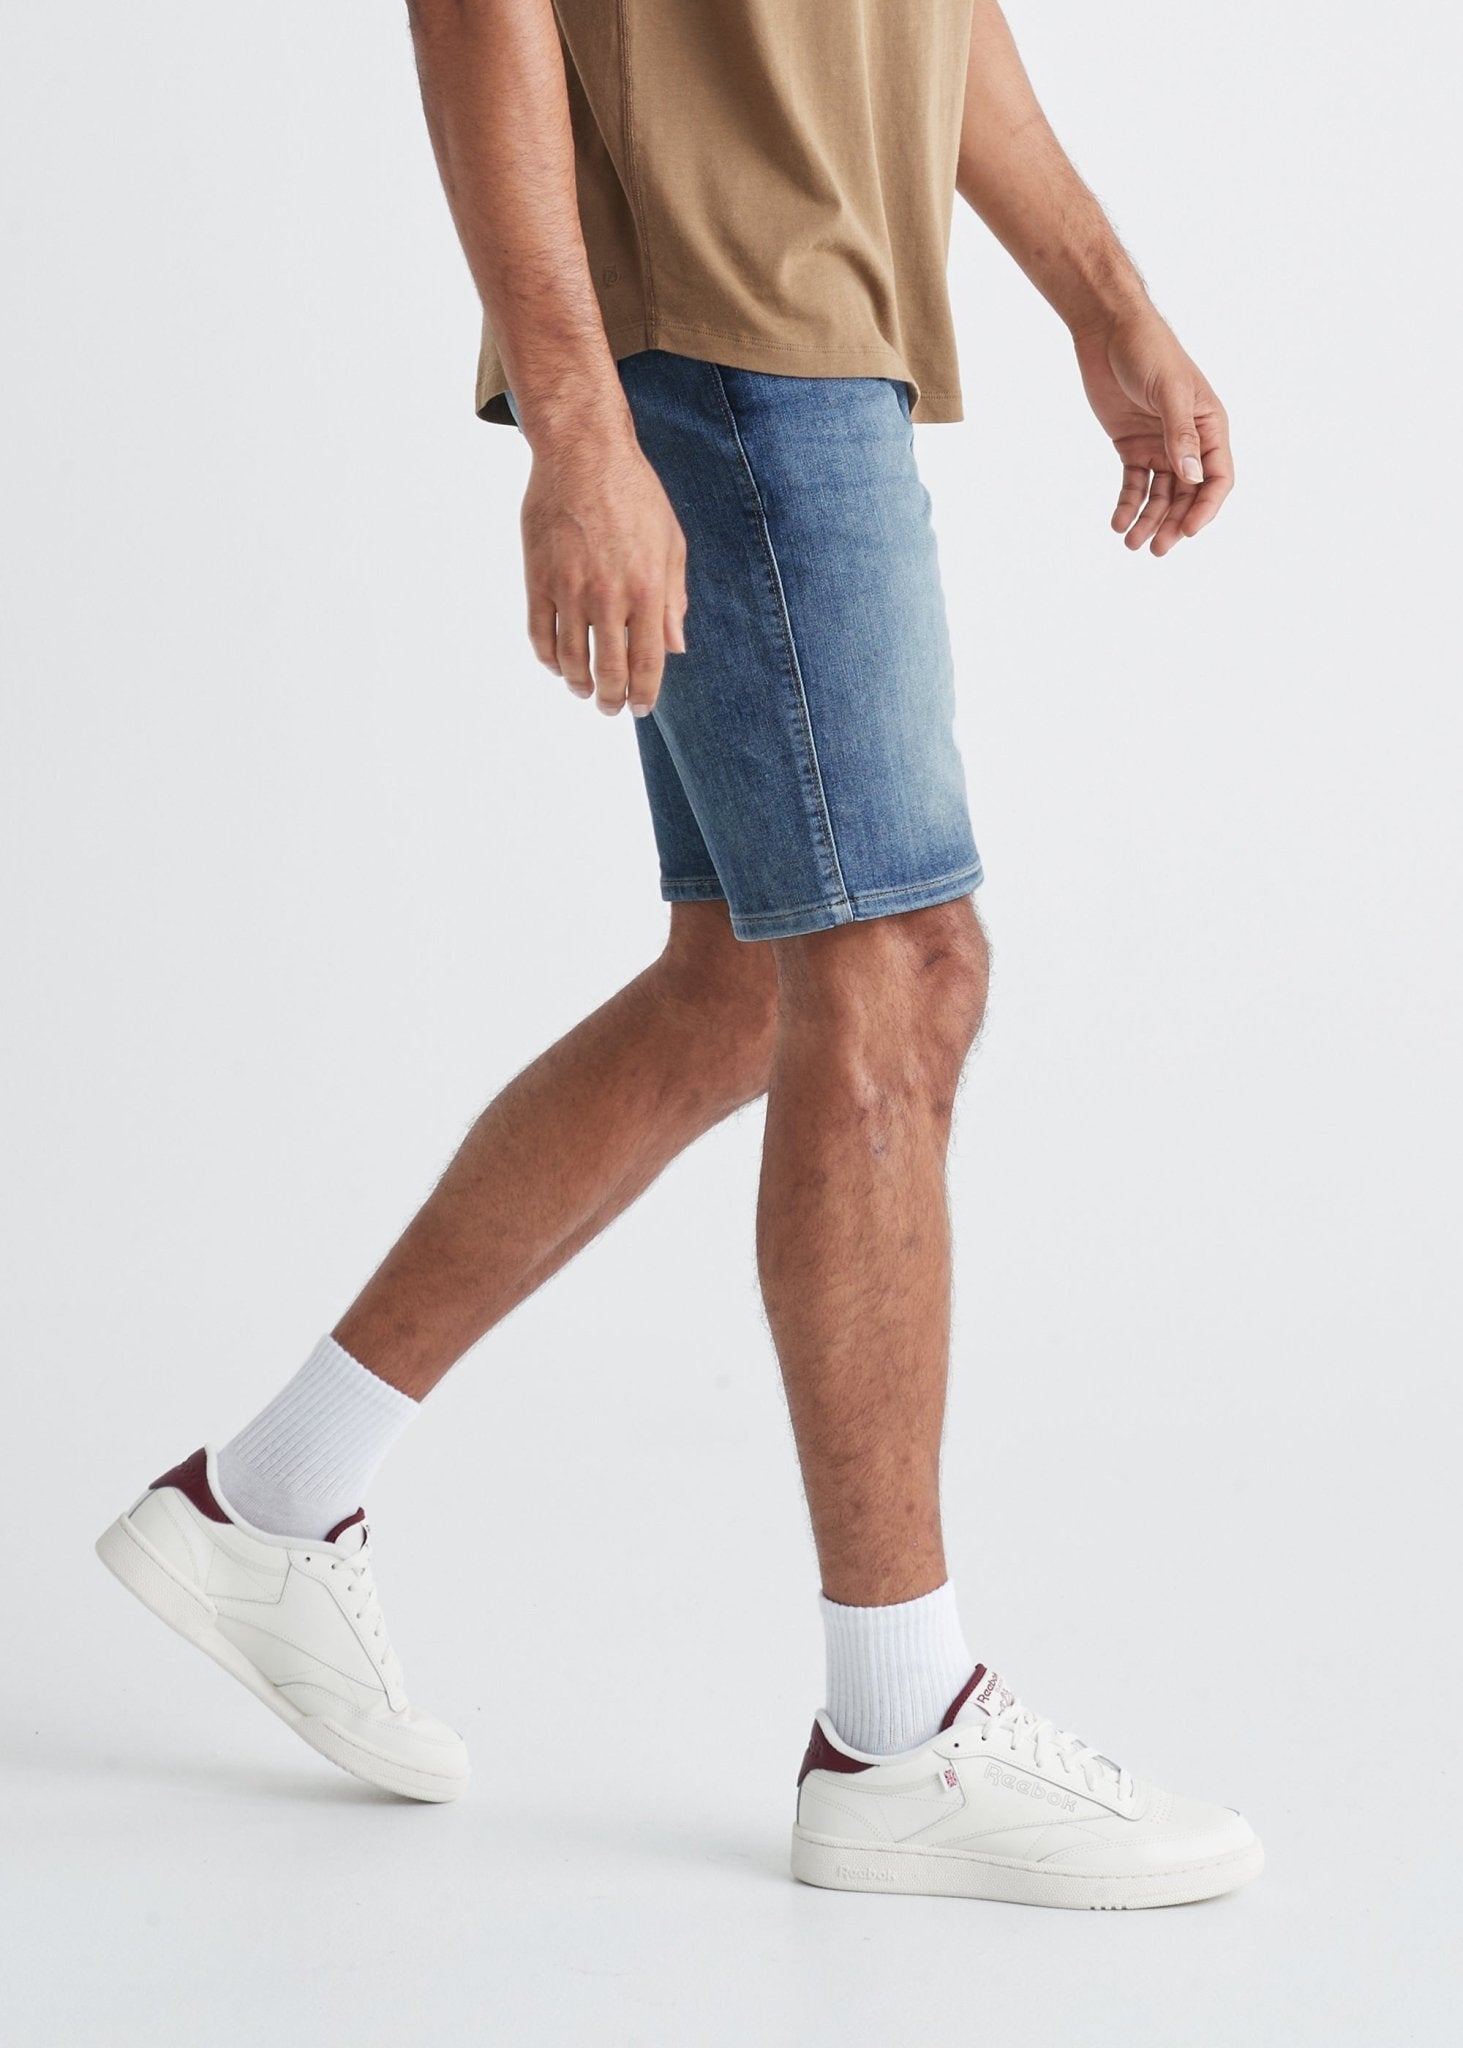 Men's and Women's Denim Shorts & Jean Shorts